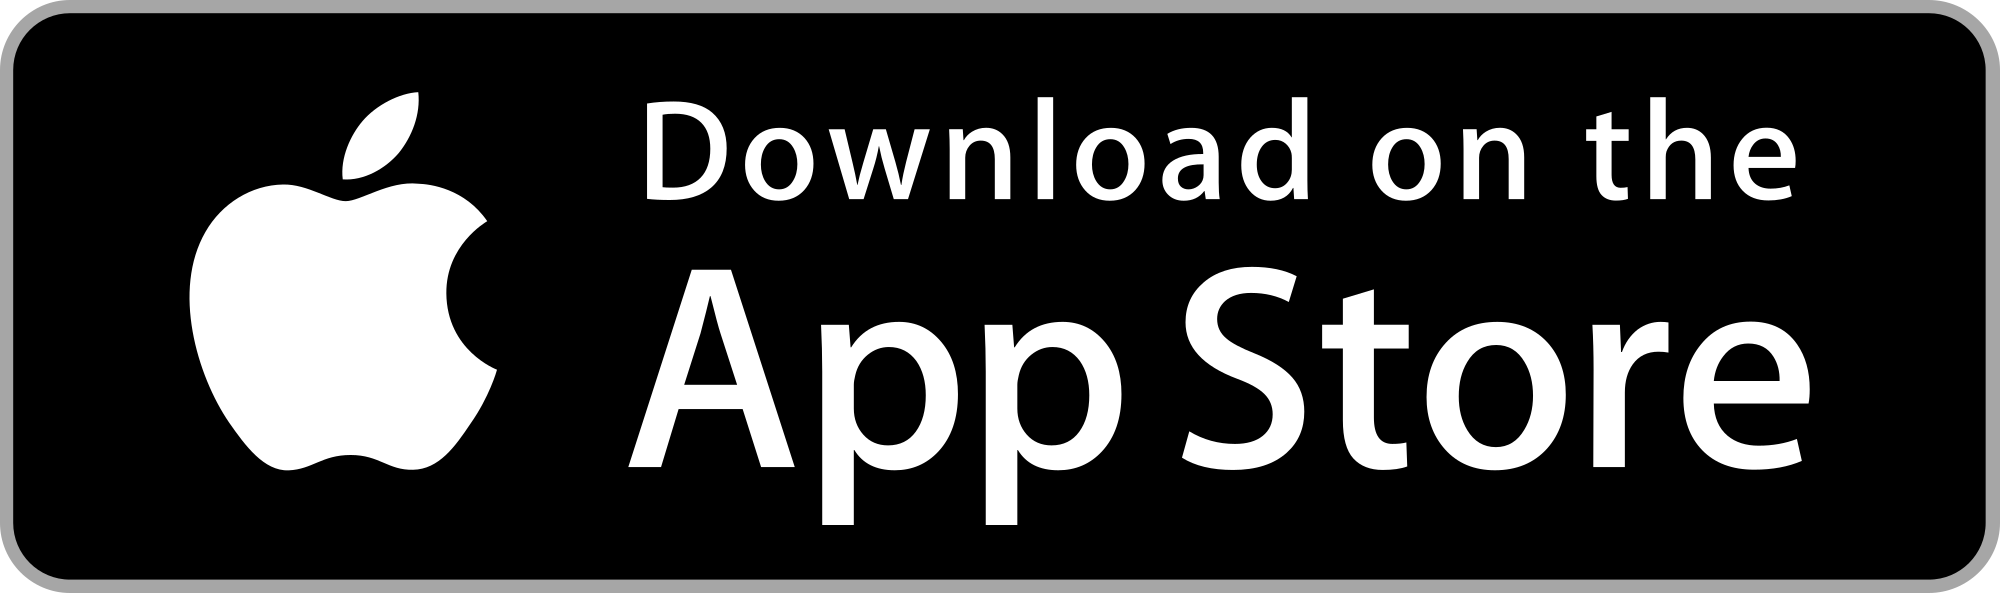 Apple App Store link to download Venmo